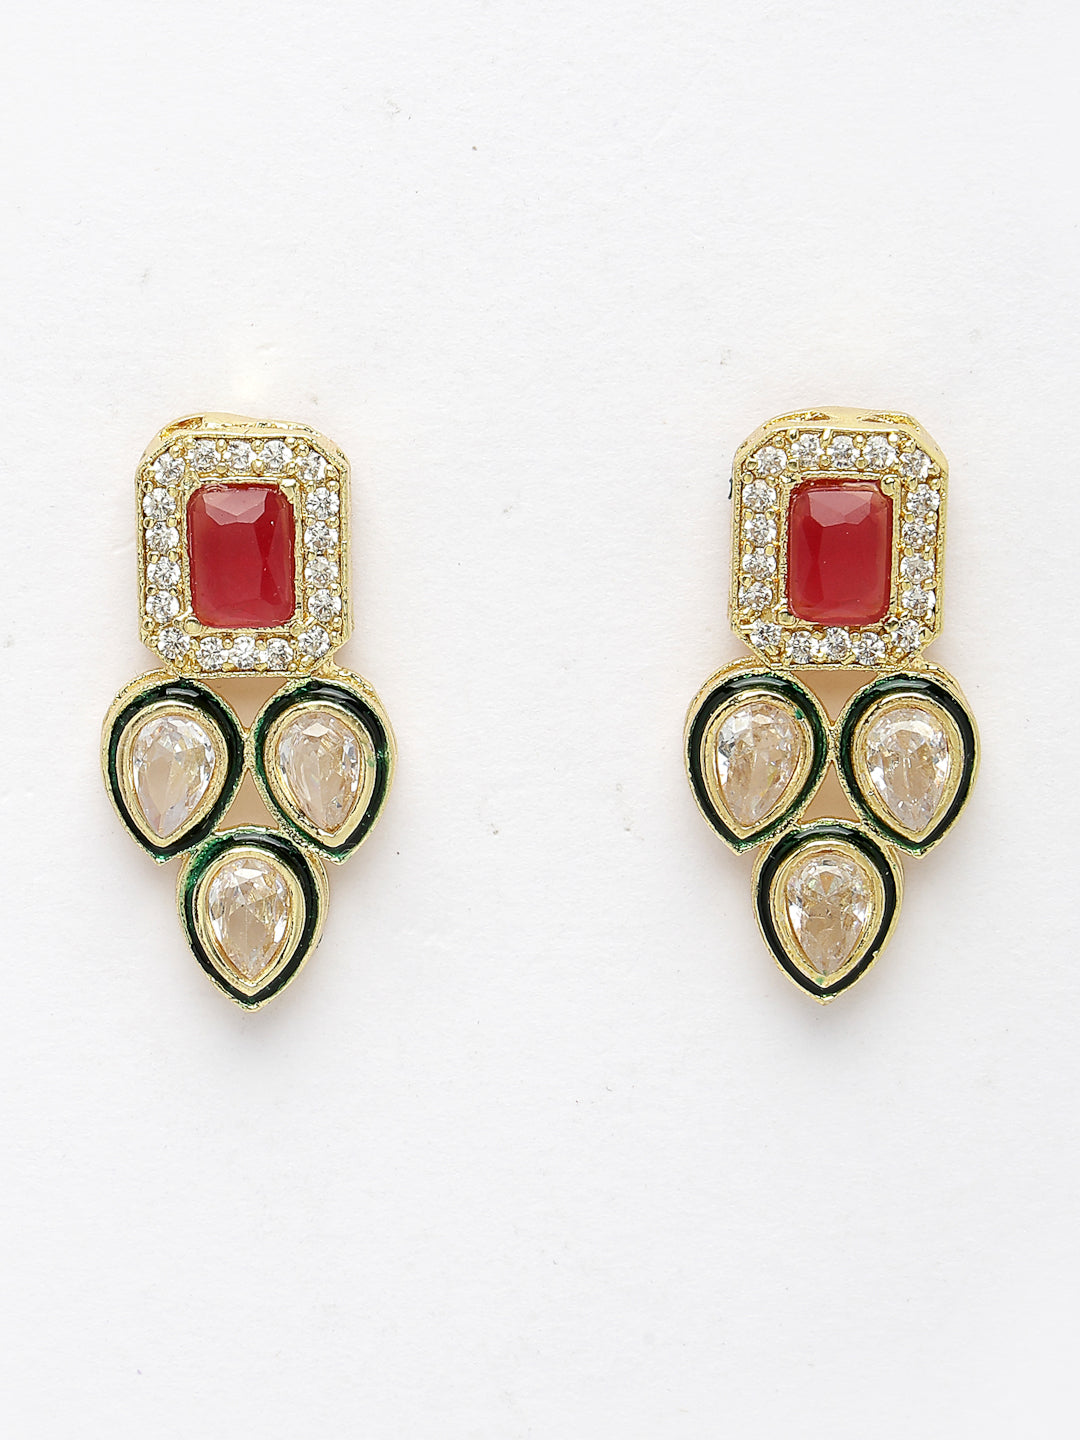 Women's Set Of 2 Red & Gold Kundan Studded Jewellery Set Choker & Long Necklace With Earrings - Nvr